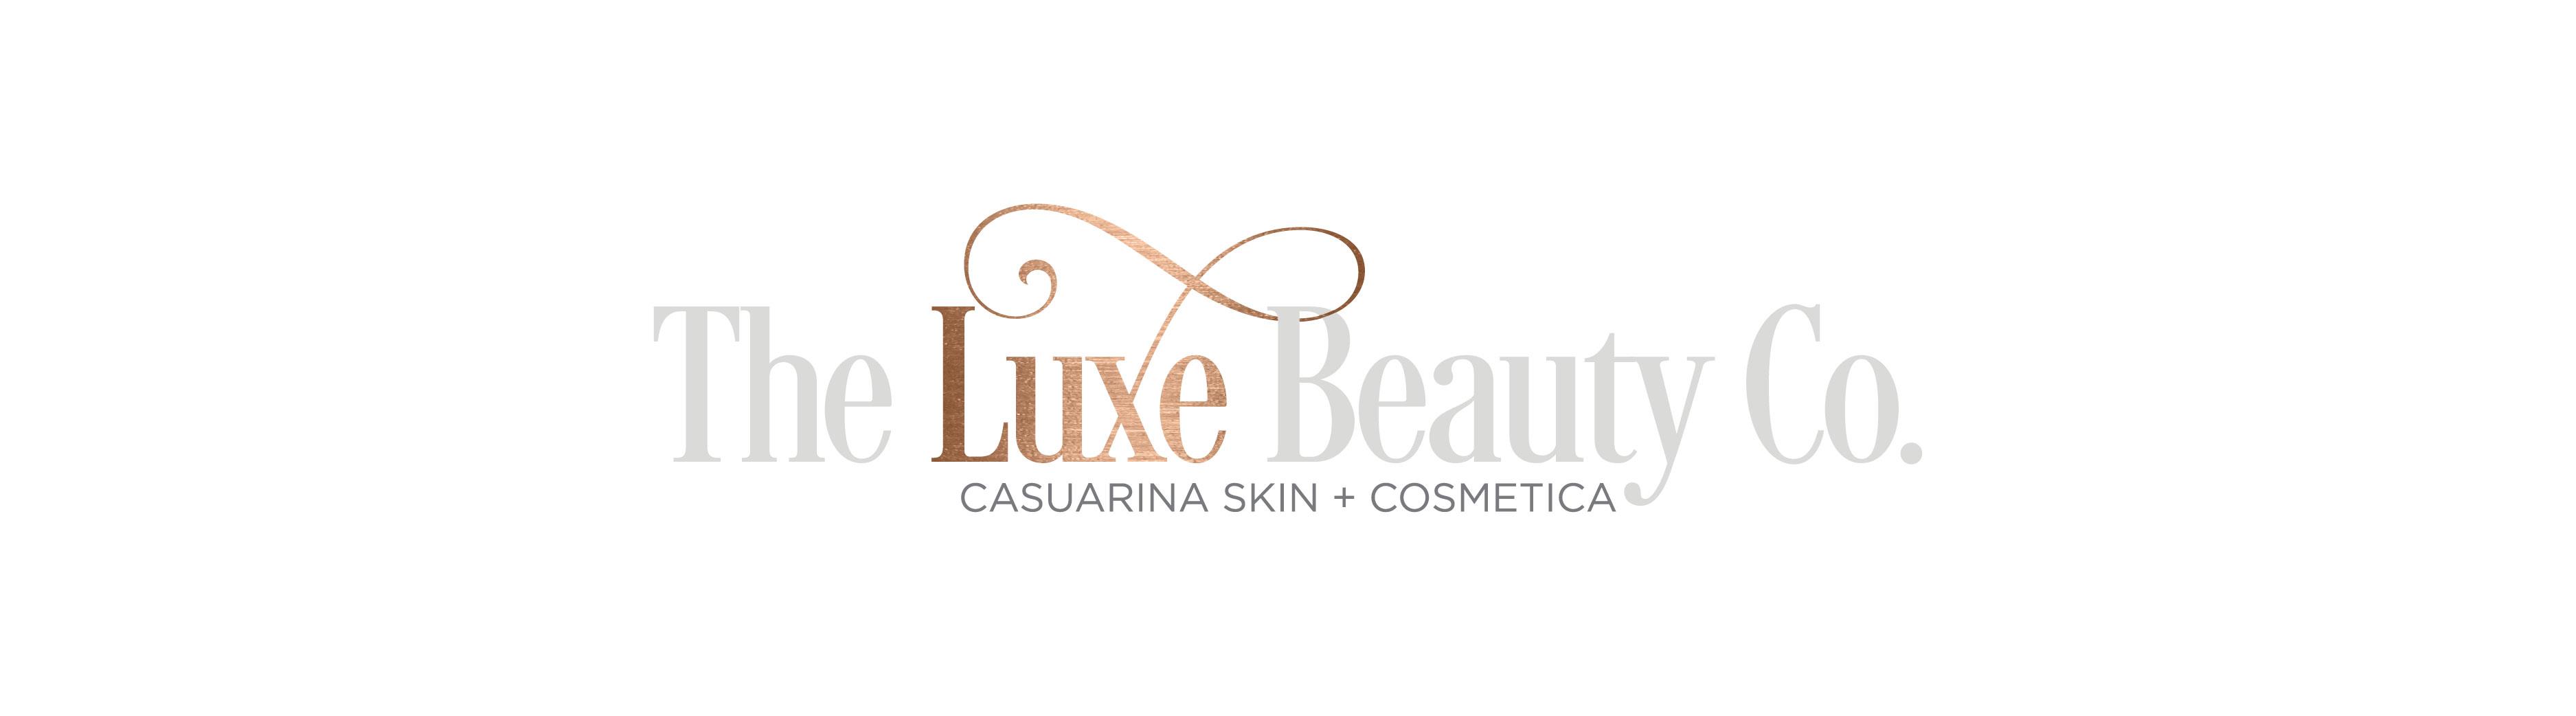 The Luxe Beauty Co. Casuarina